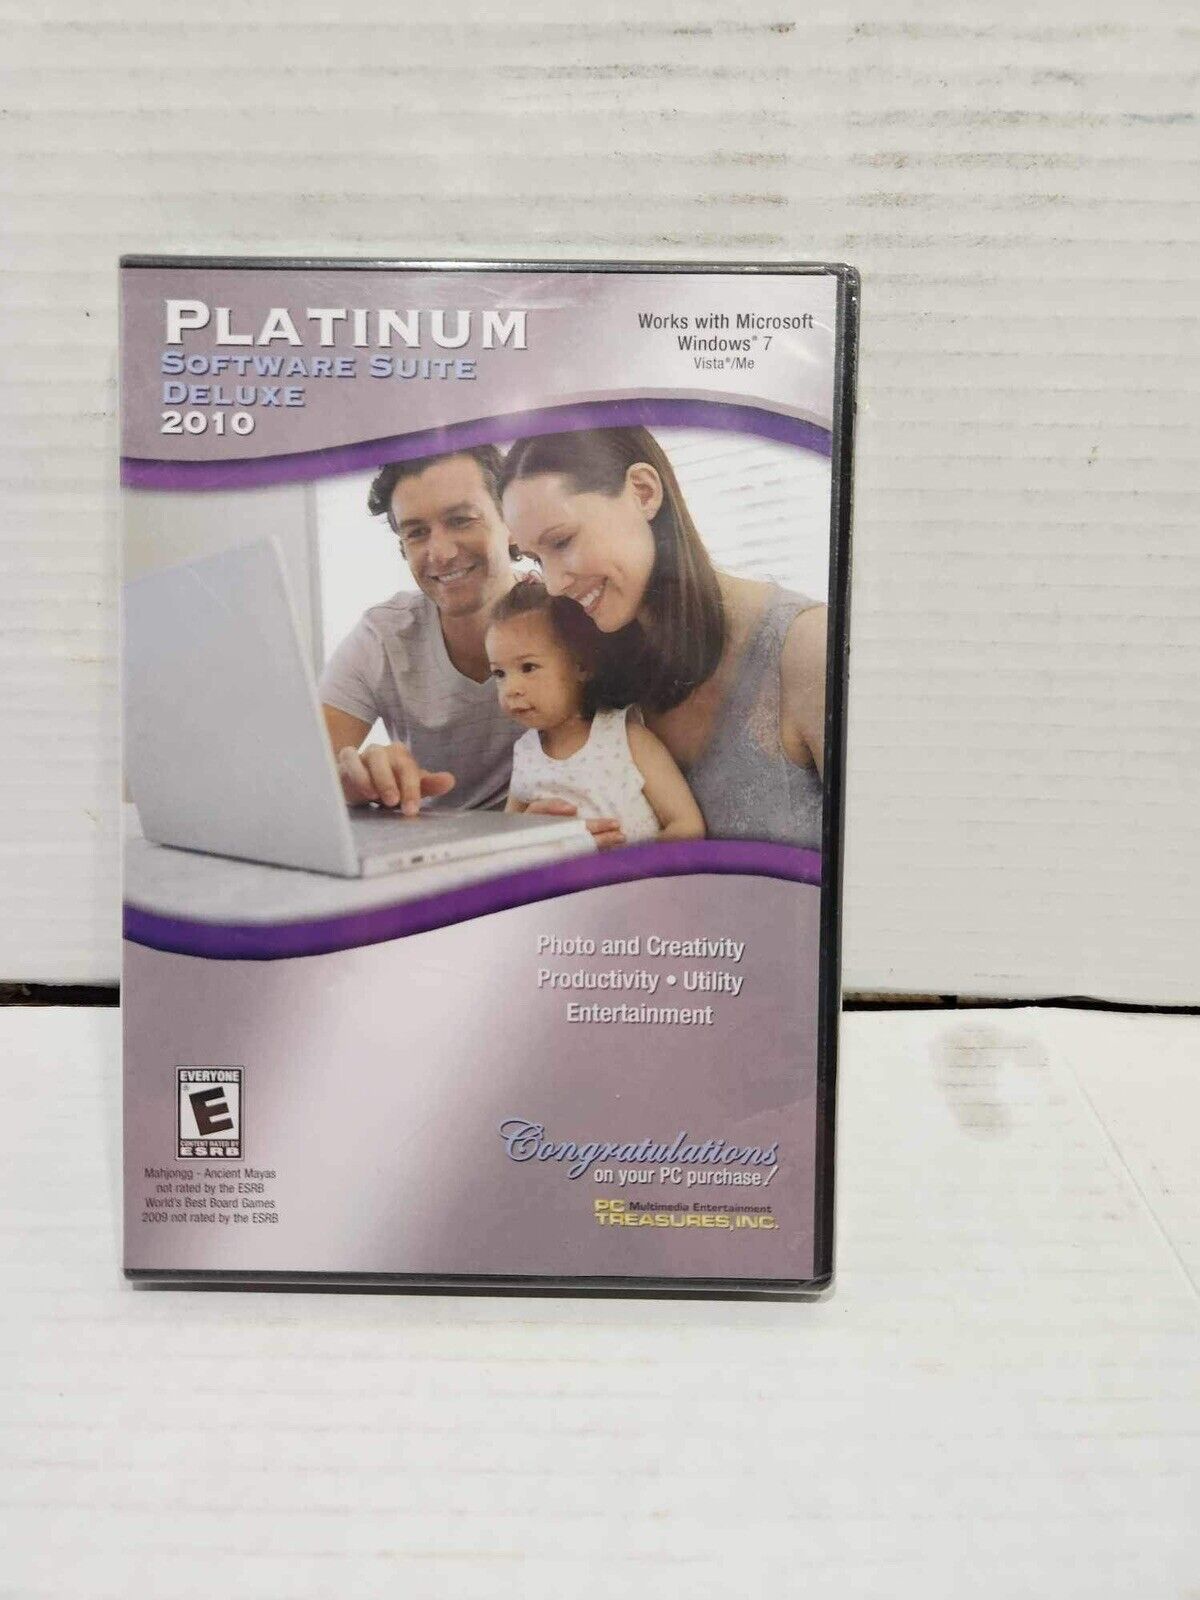 Platinum Software Suite Deluxe 2010 Windows PC Photoshop H&R Block McAfee NEW